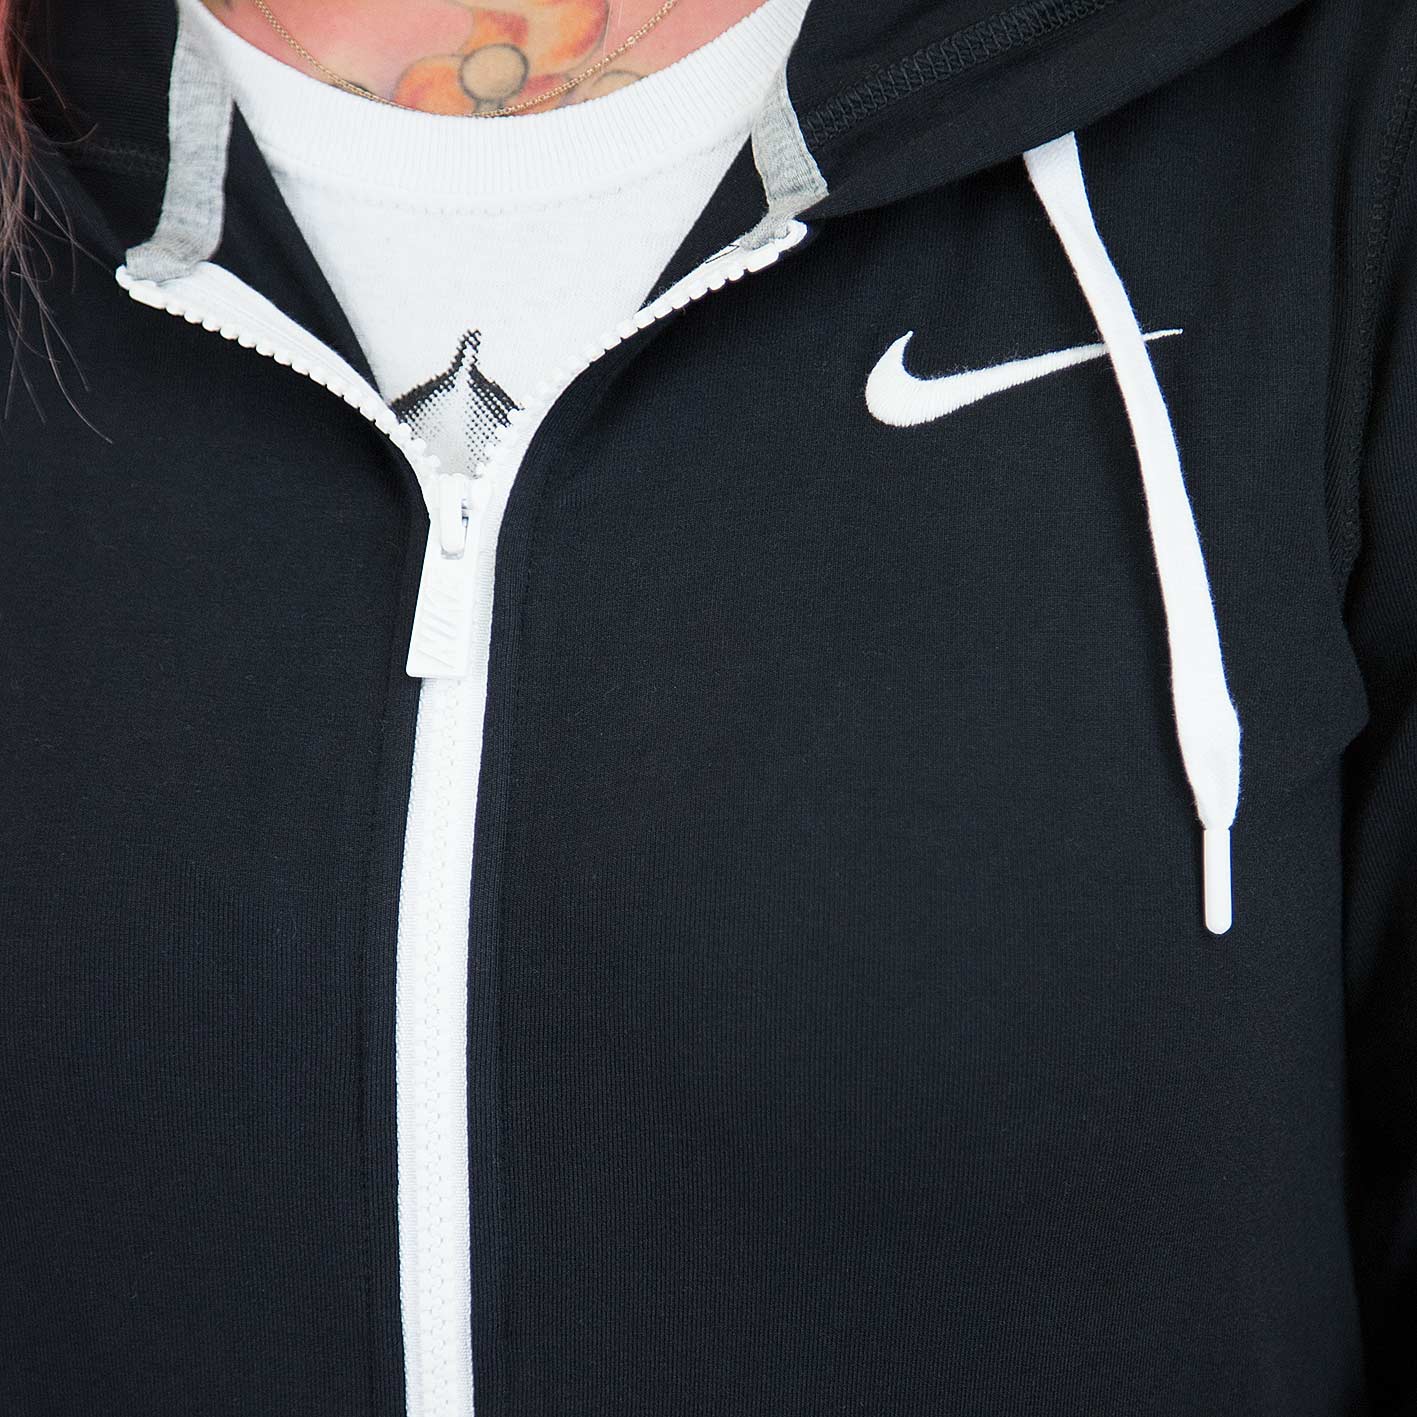 ☆ Nike Damen Zip-Hoody Jersey schwarz/weiß - hier bestellen!